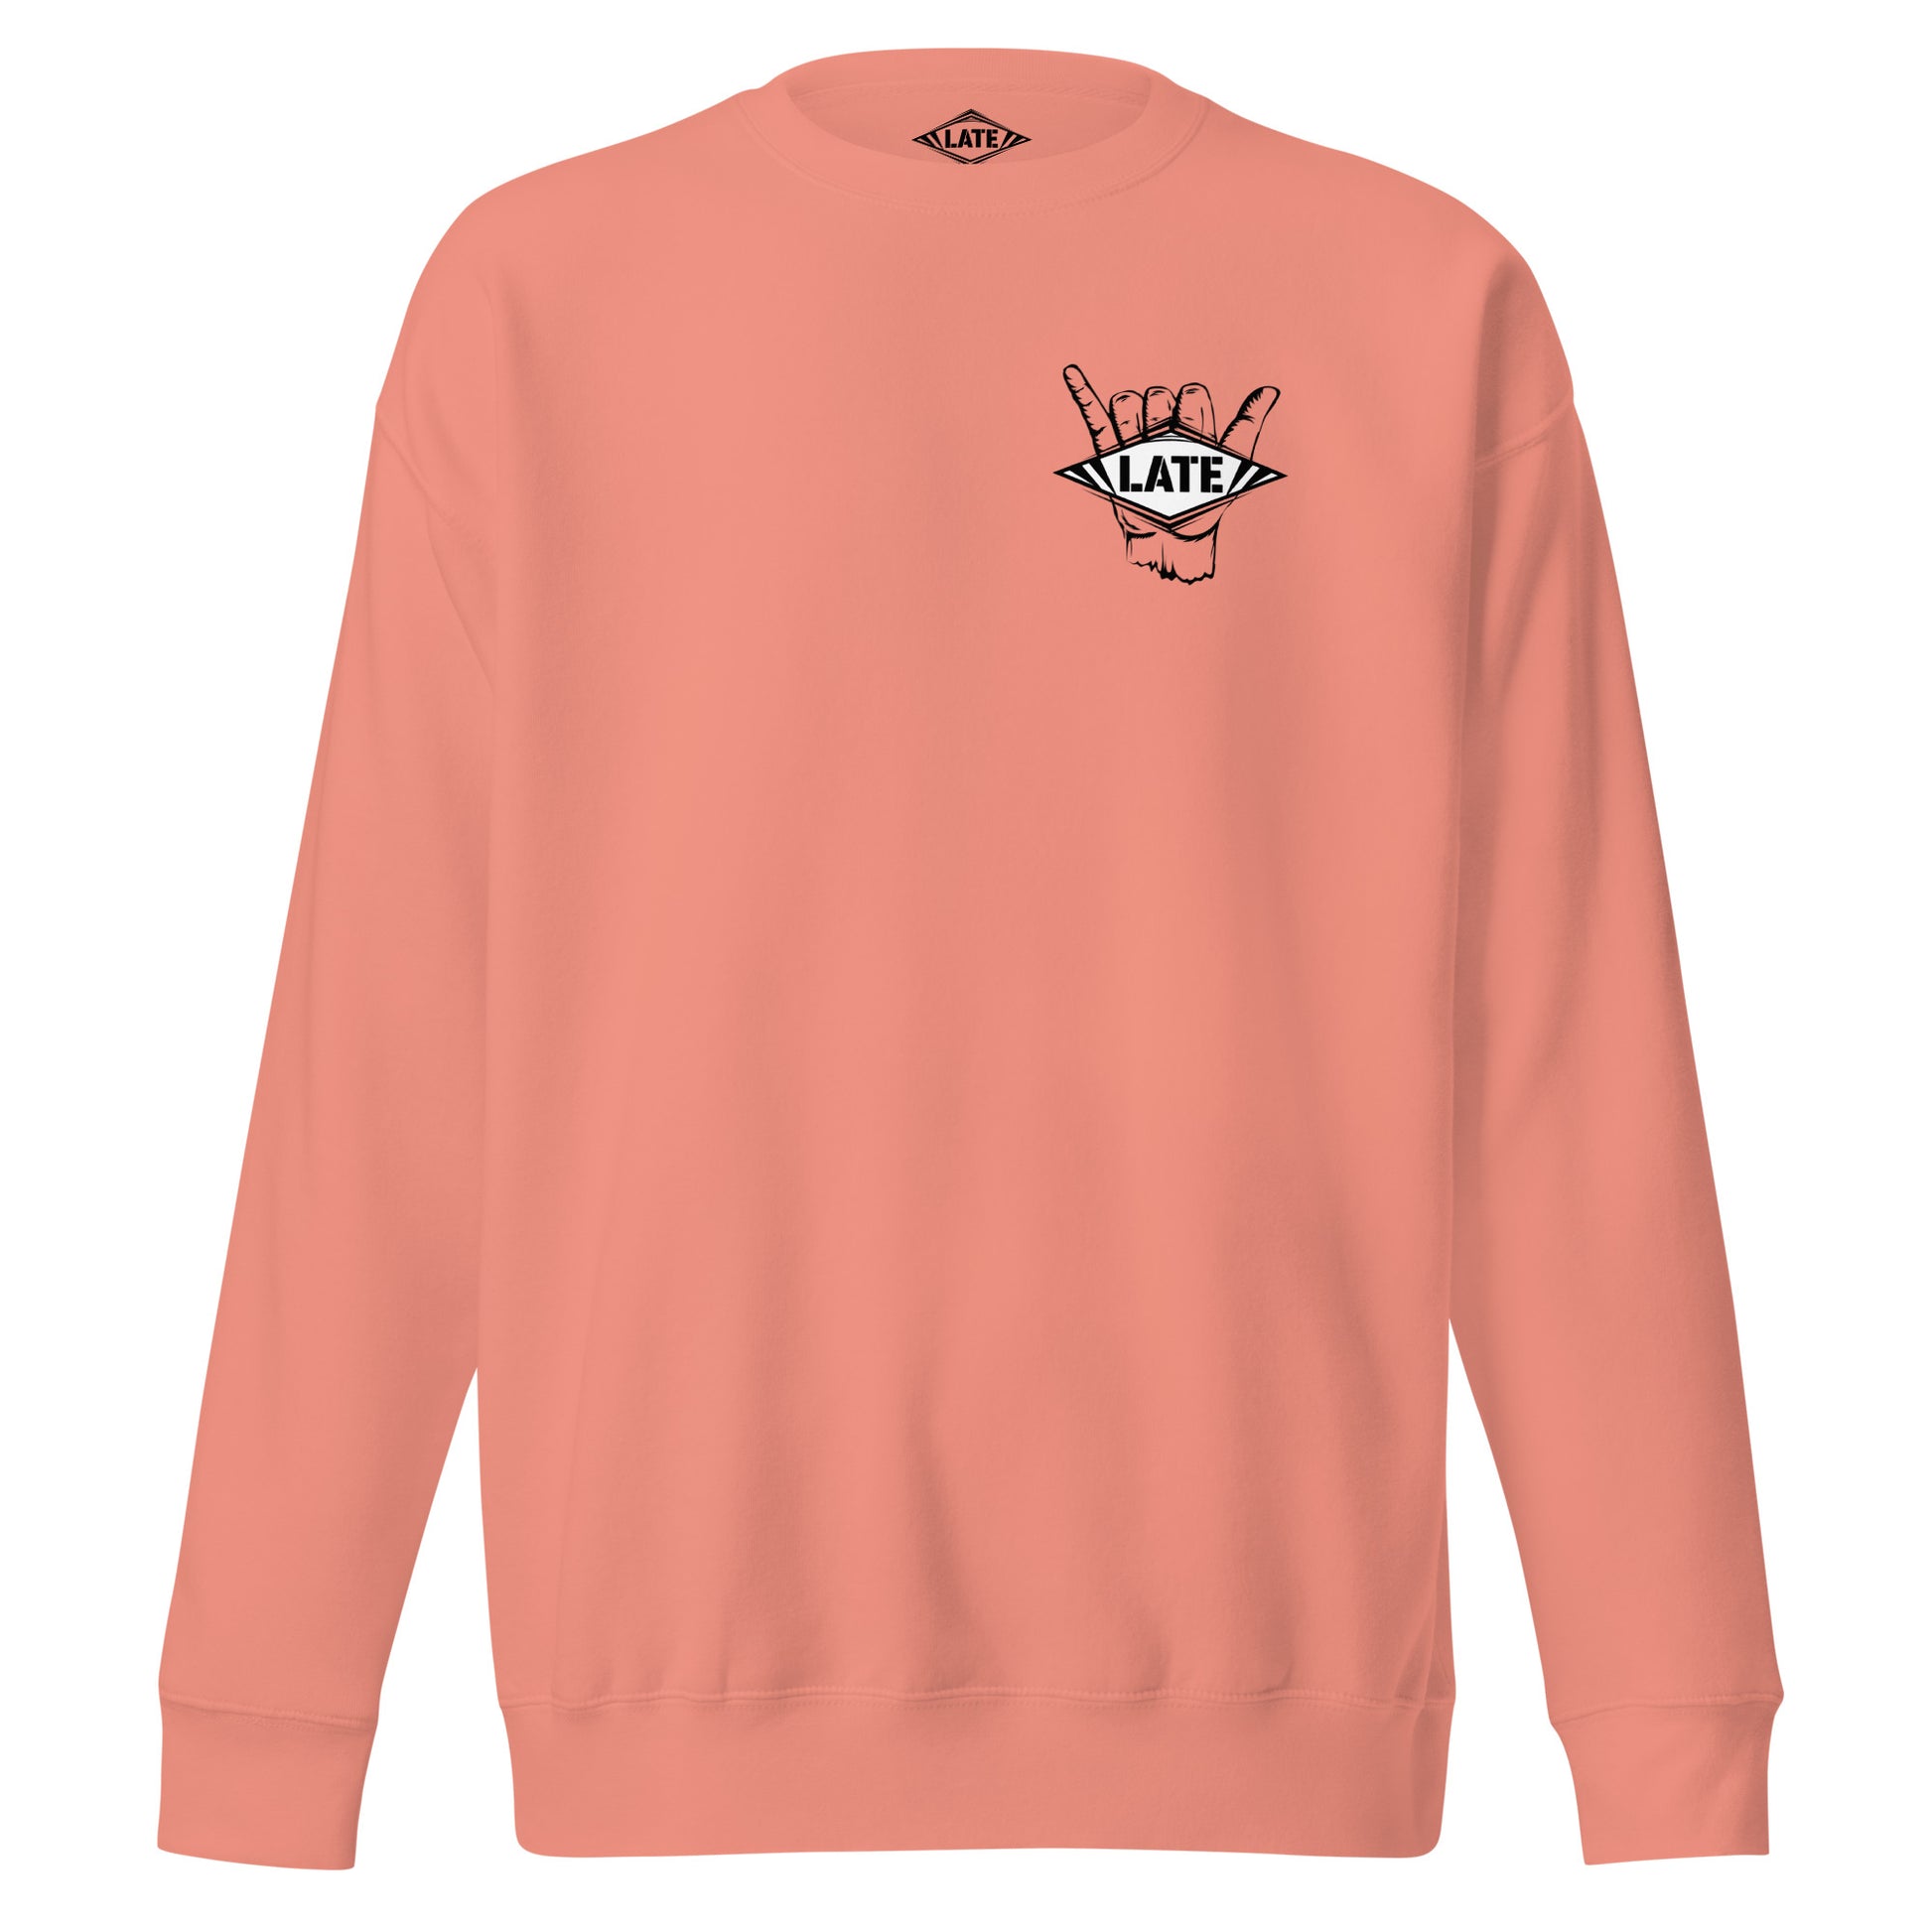 Sweatshirt Never Too Late shaka hand surfeur, avec le logo Late surfoard, sweat unisex de face couleur rose